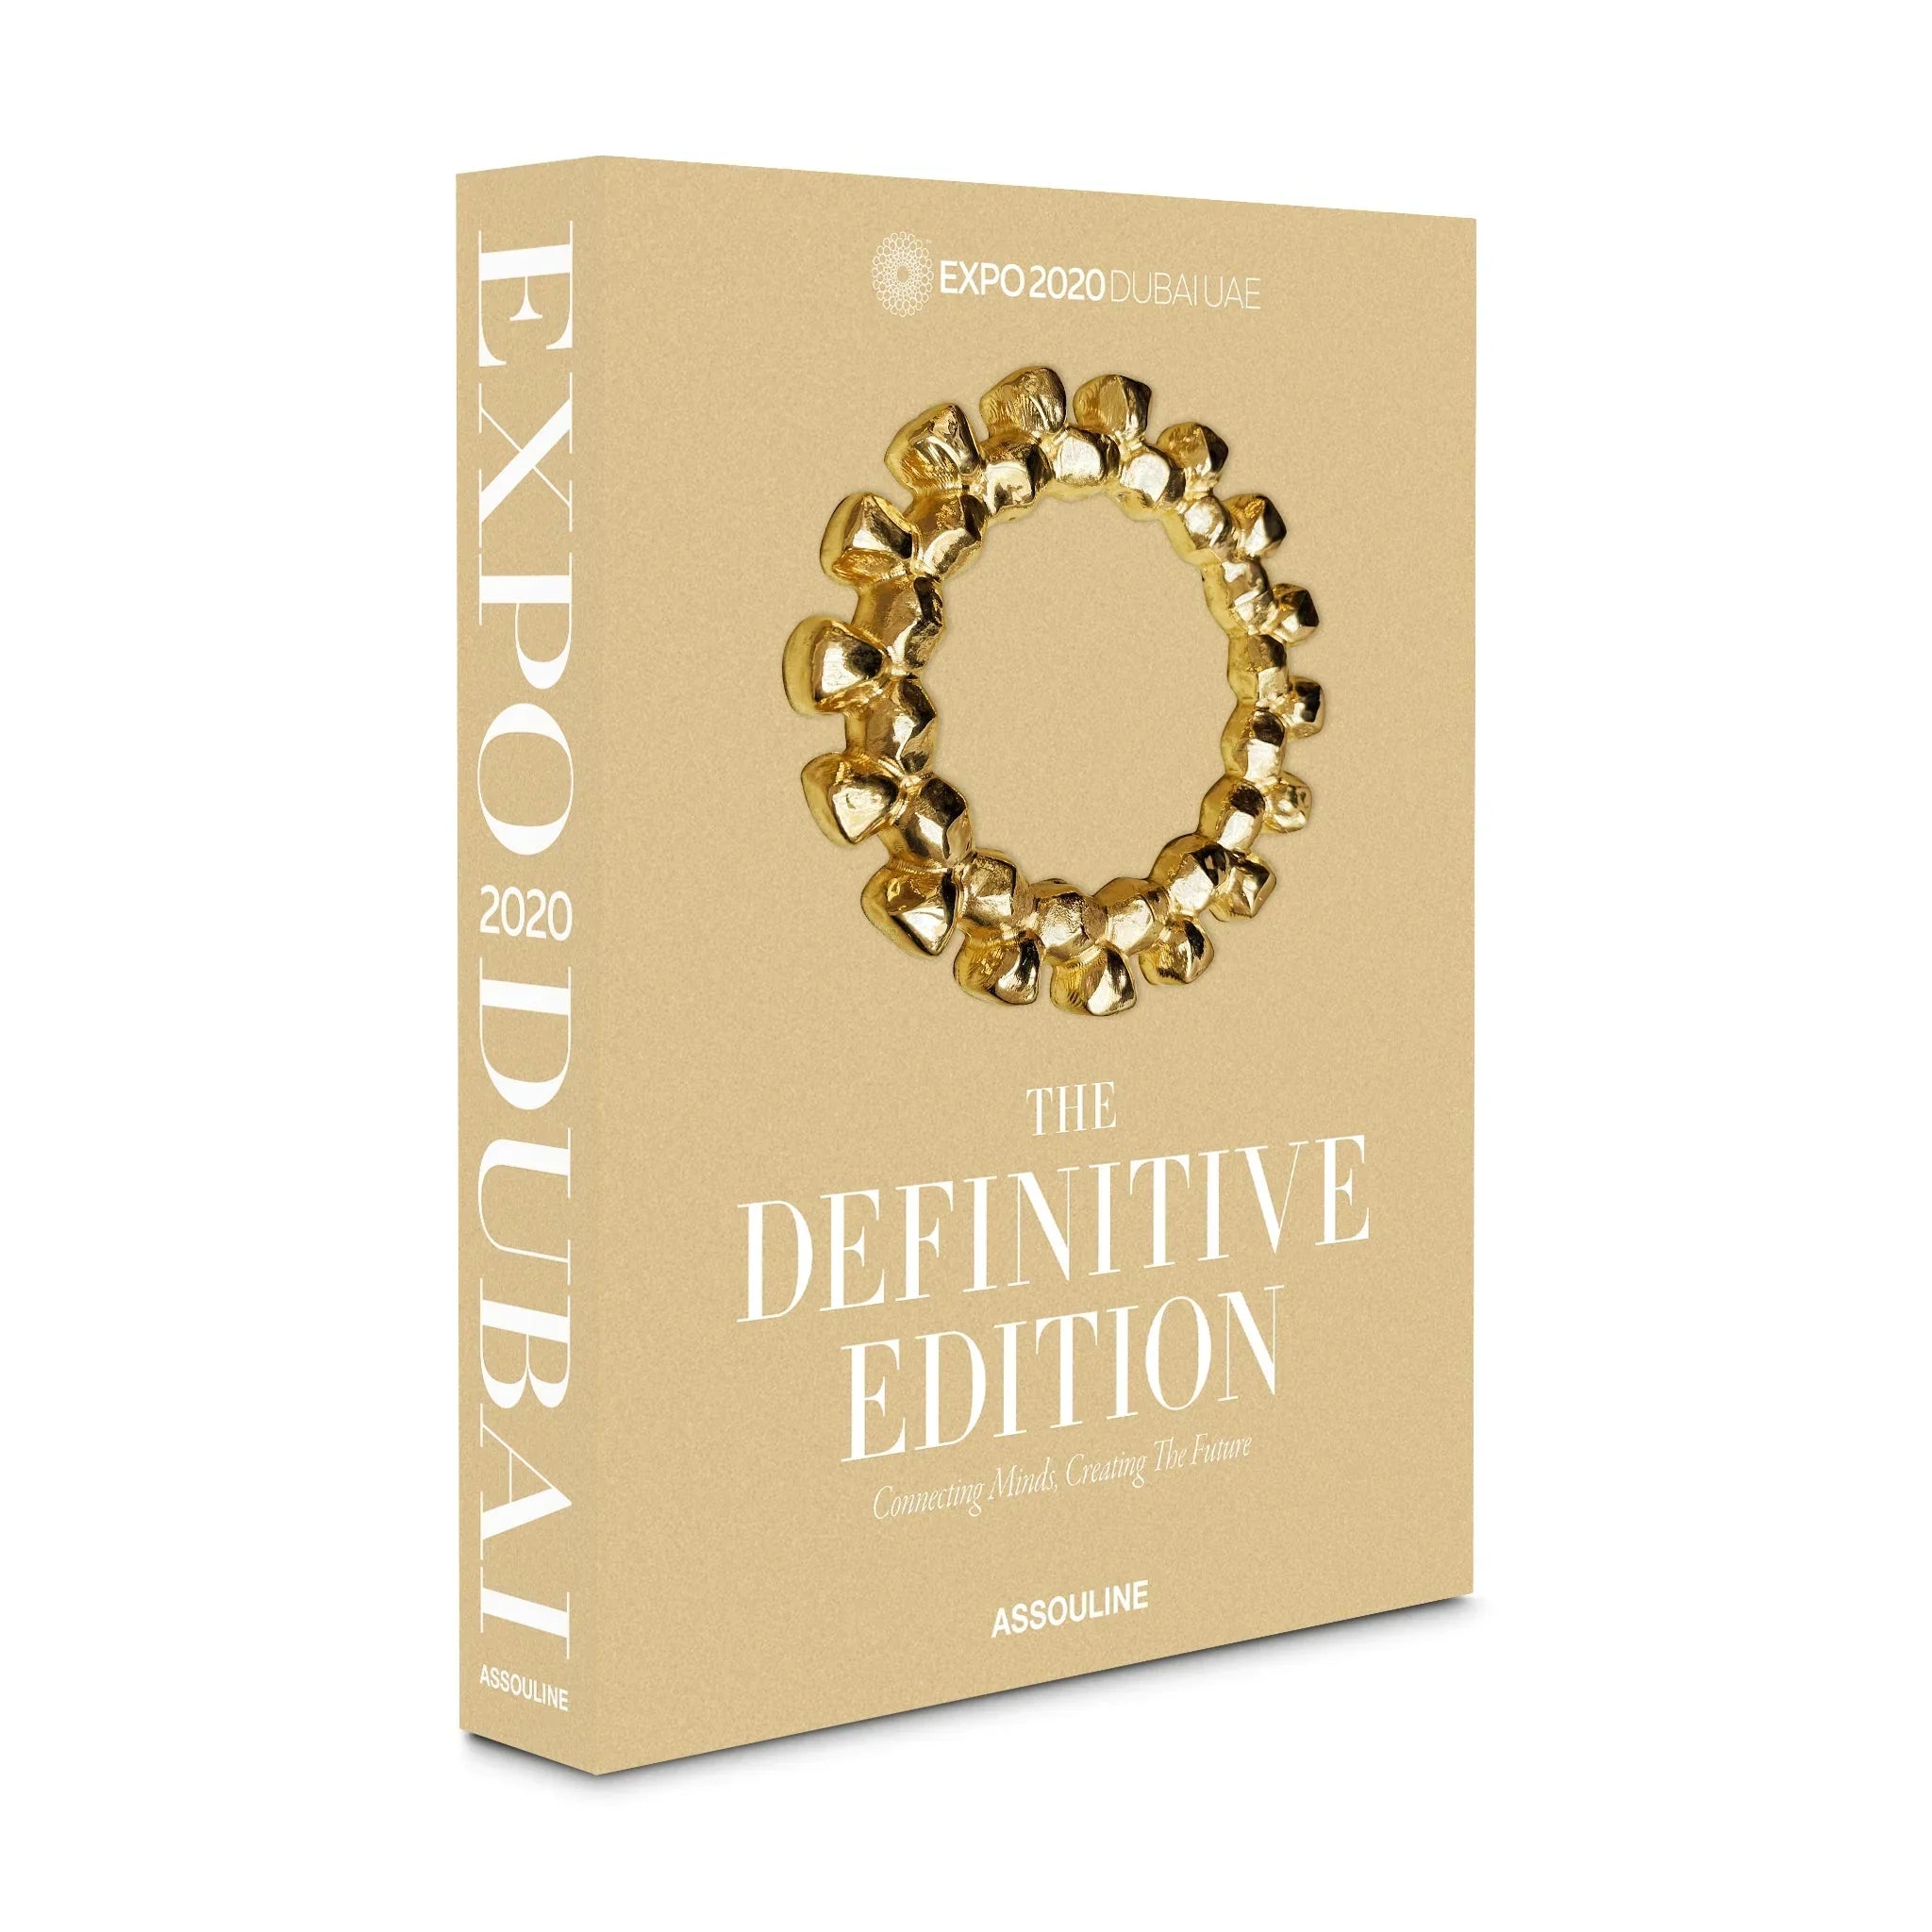 expo 2020 dubai: the definitive edition 15